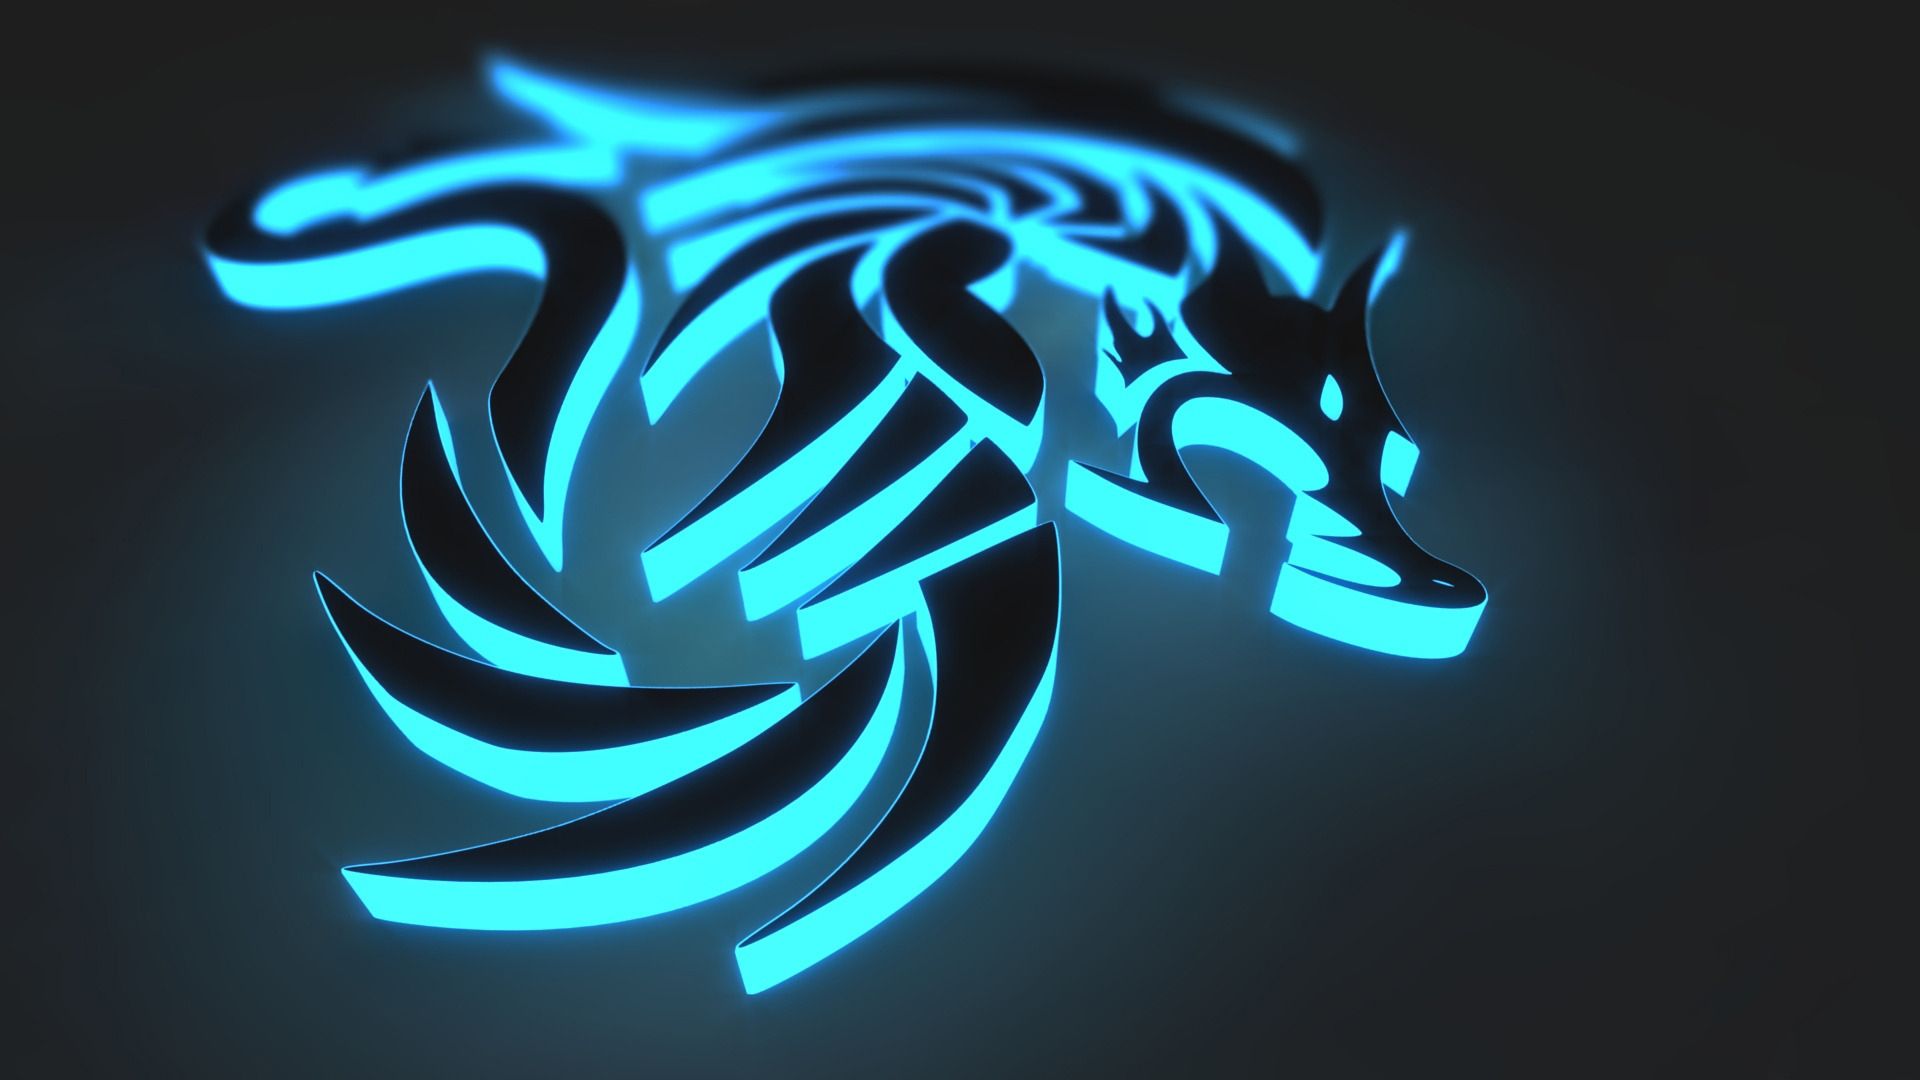 3D Black and Blue Dragon Emblem. LOGOS & BRANDS